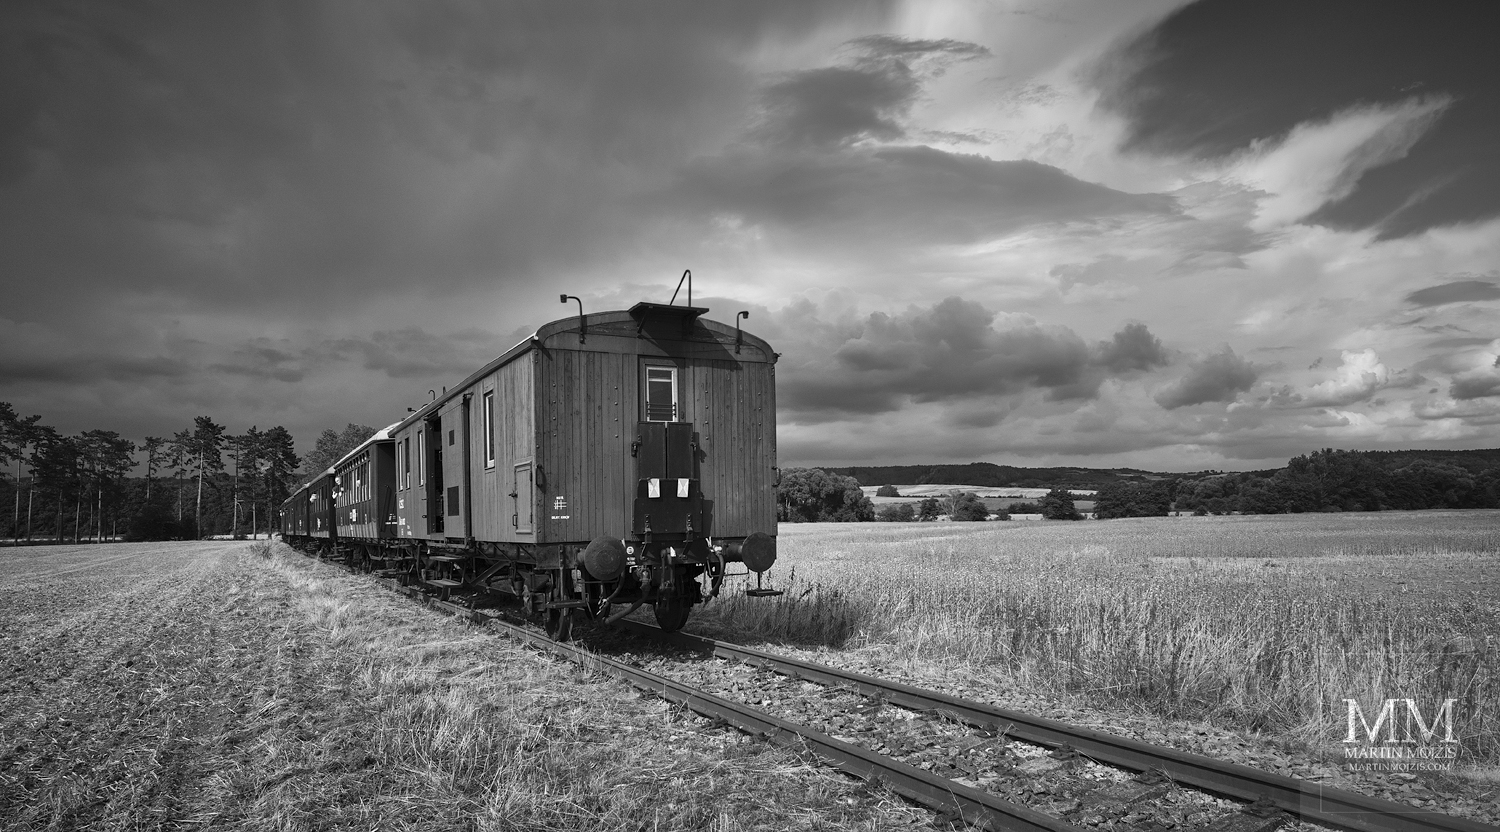 Fine Art large format black and white photograph of the historic train. Martin Mojzis.